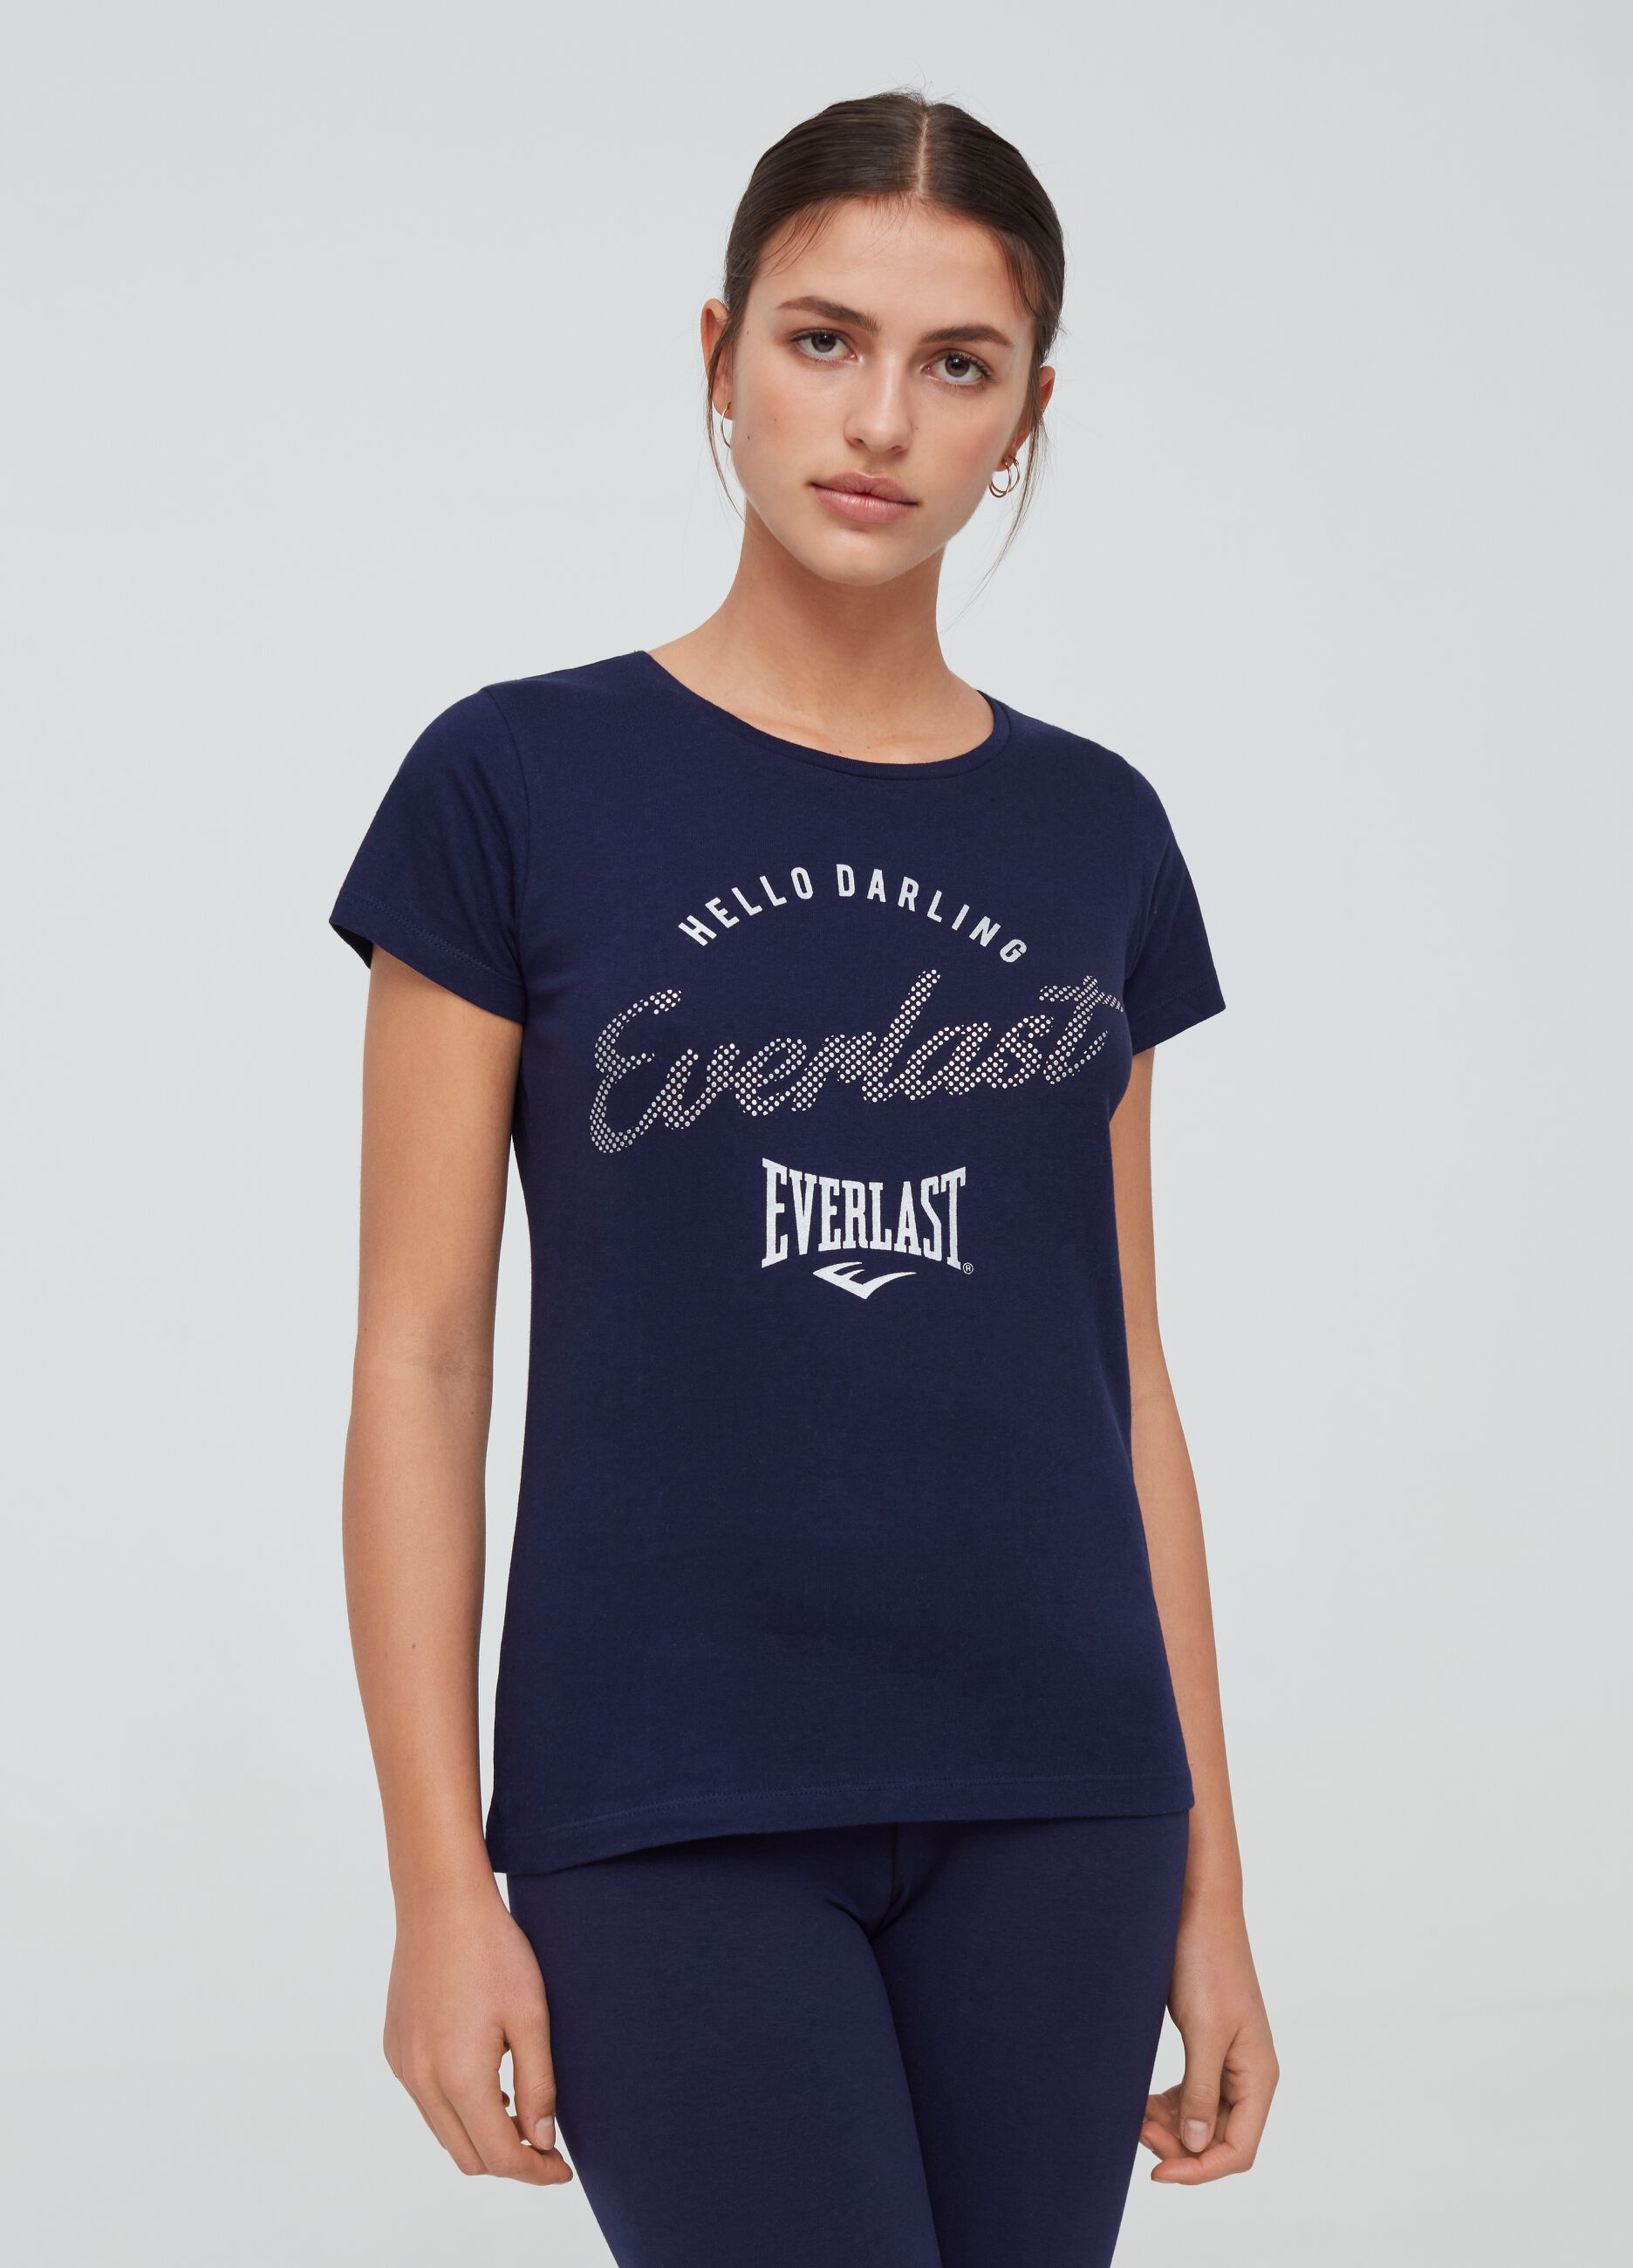 Everlast 100% cotton T-shirt